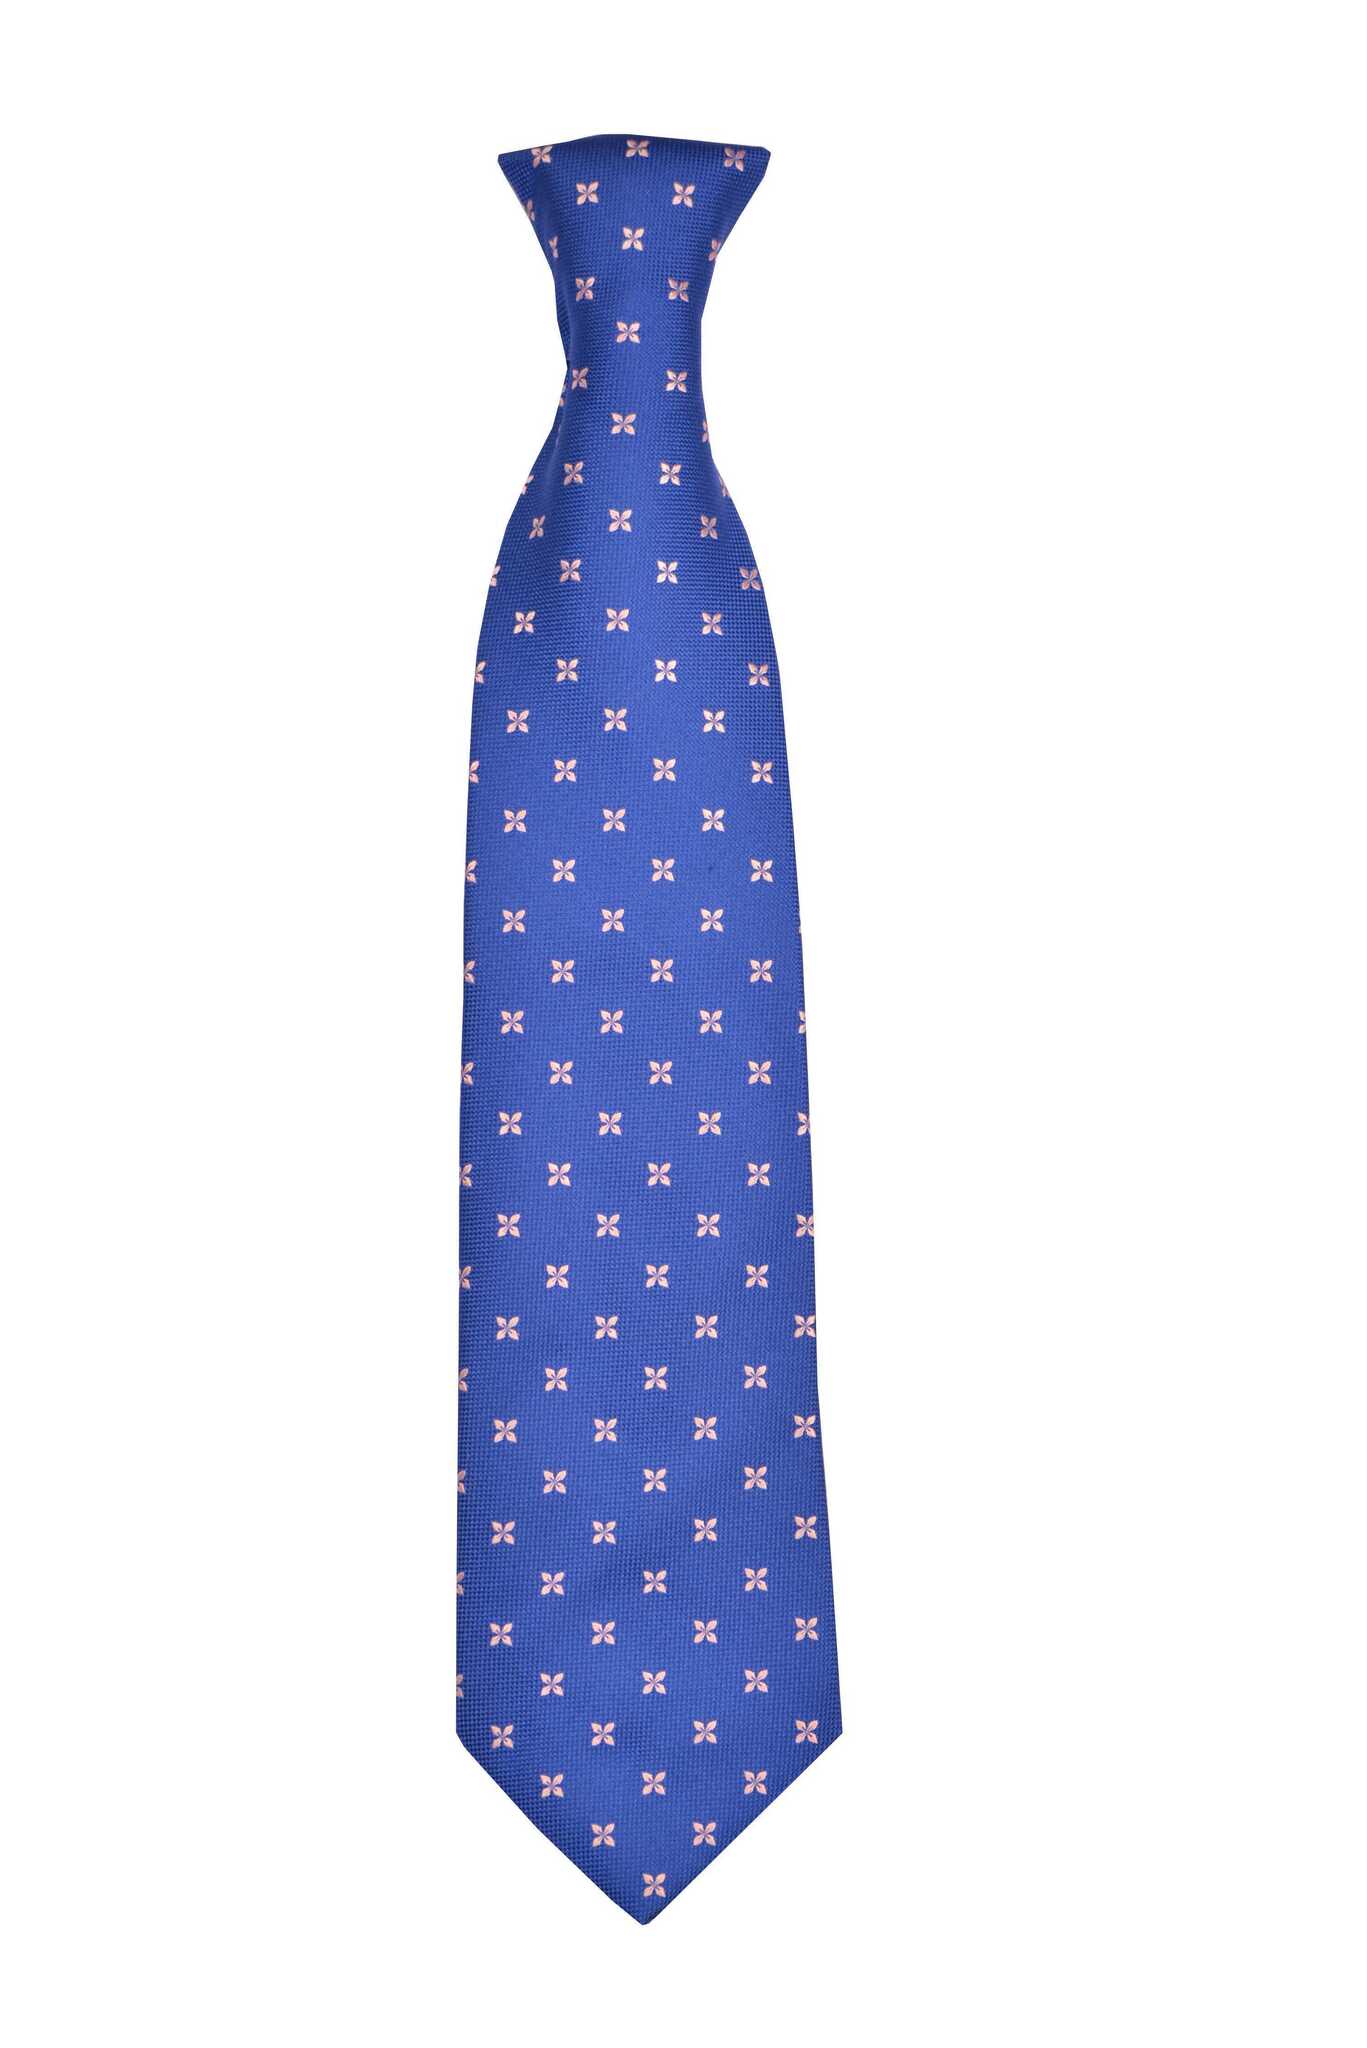 Картинка галстук мужской. Галстук. Галстук мужской. Синий галстук. Галстук мужской синий.